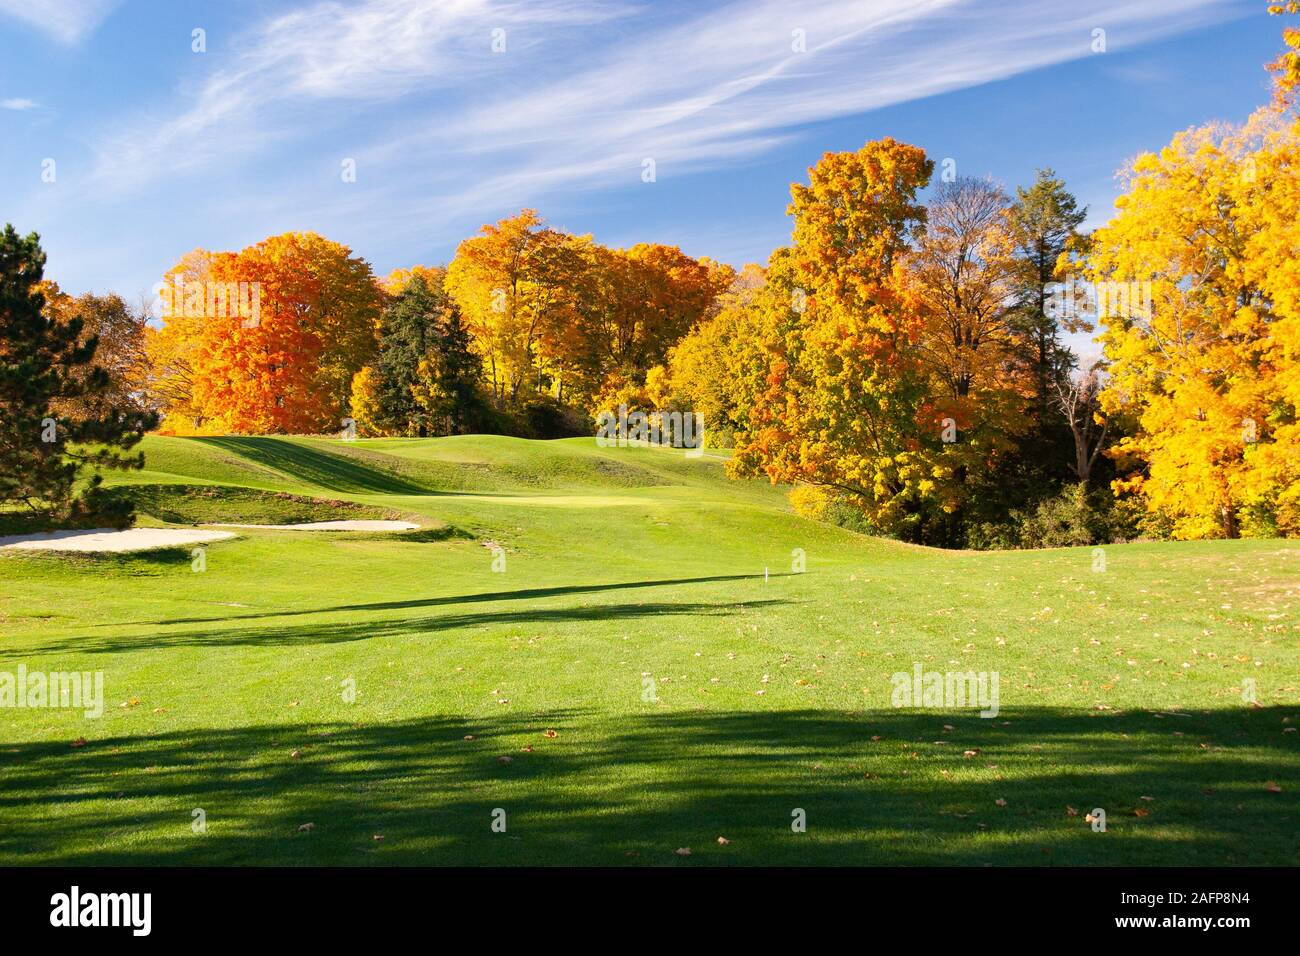 landscape fall foliage at Golf Course Stock Photo